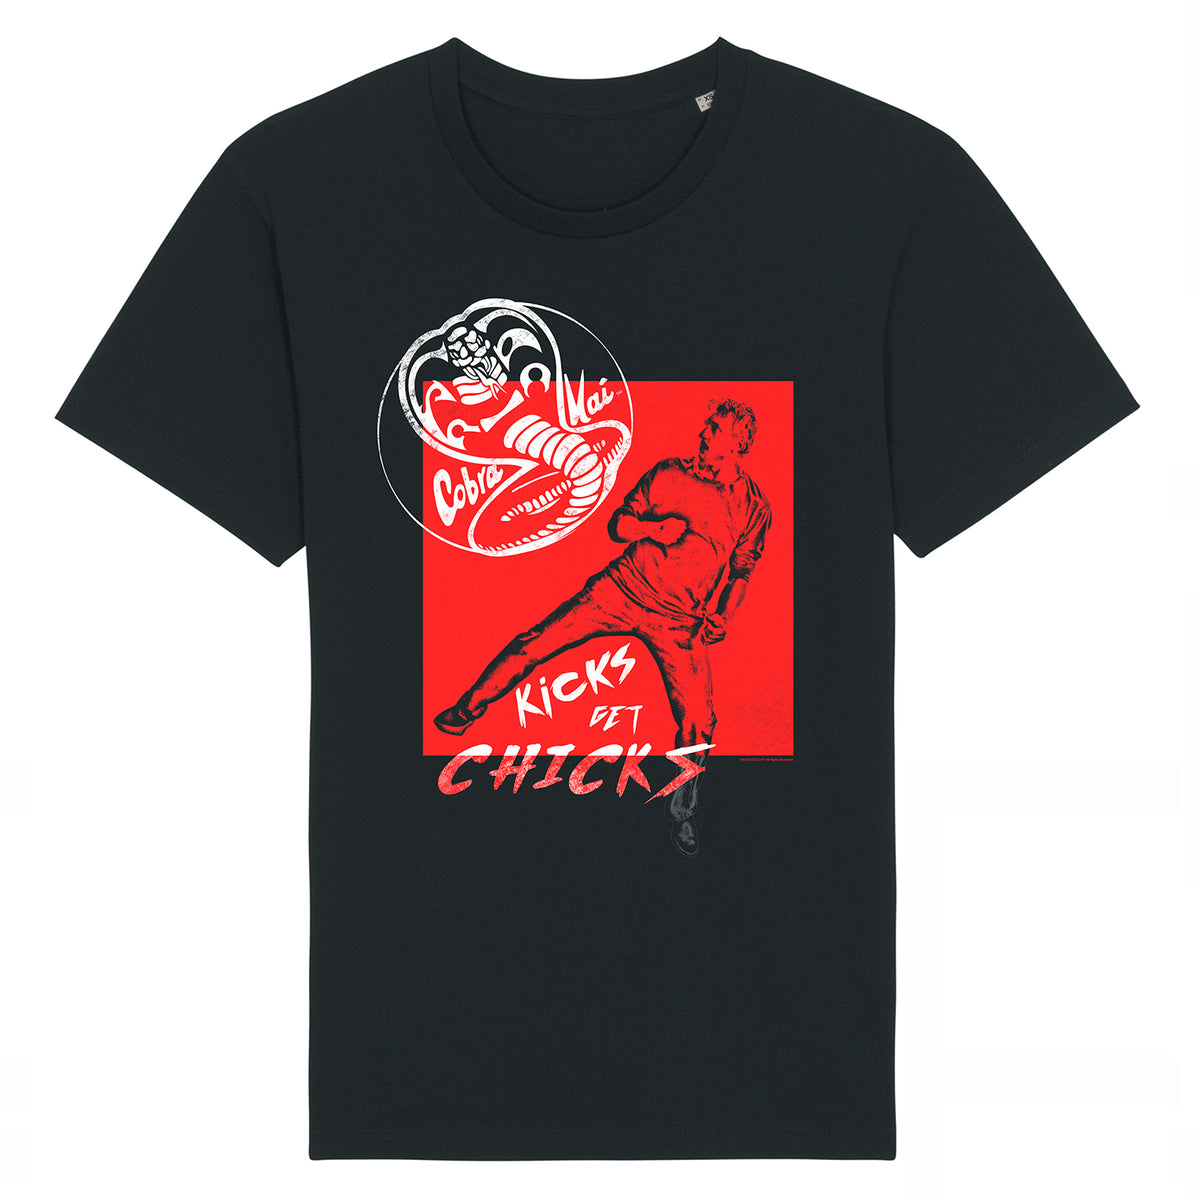 Kicks Get Chicks Black Unisex T-Shirt